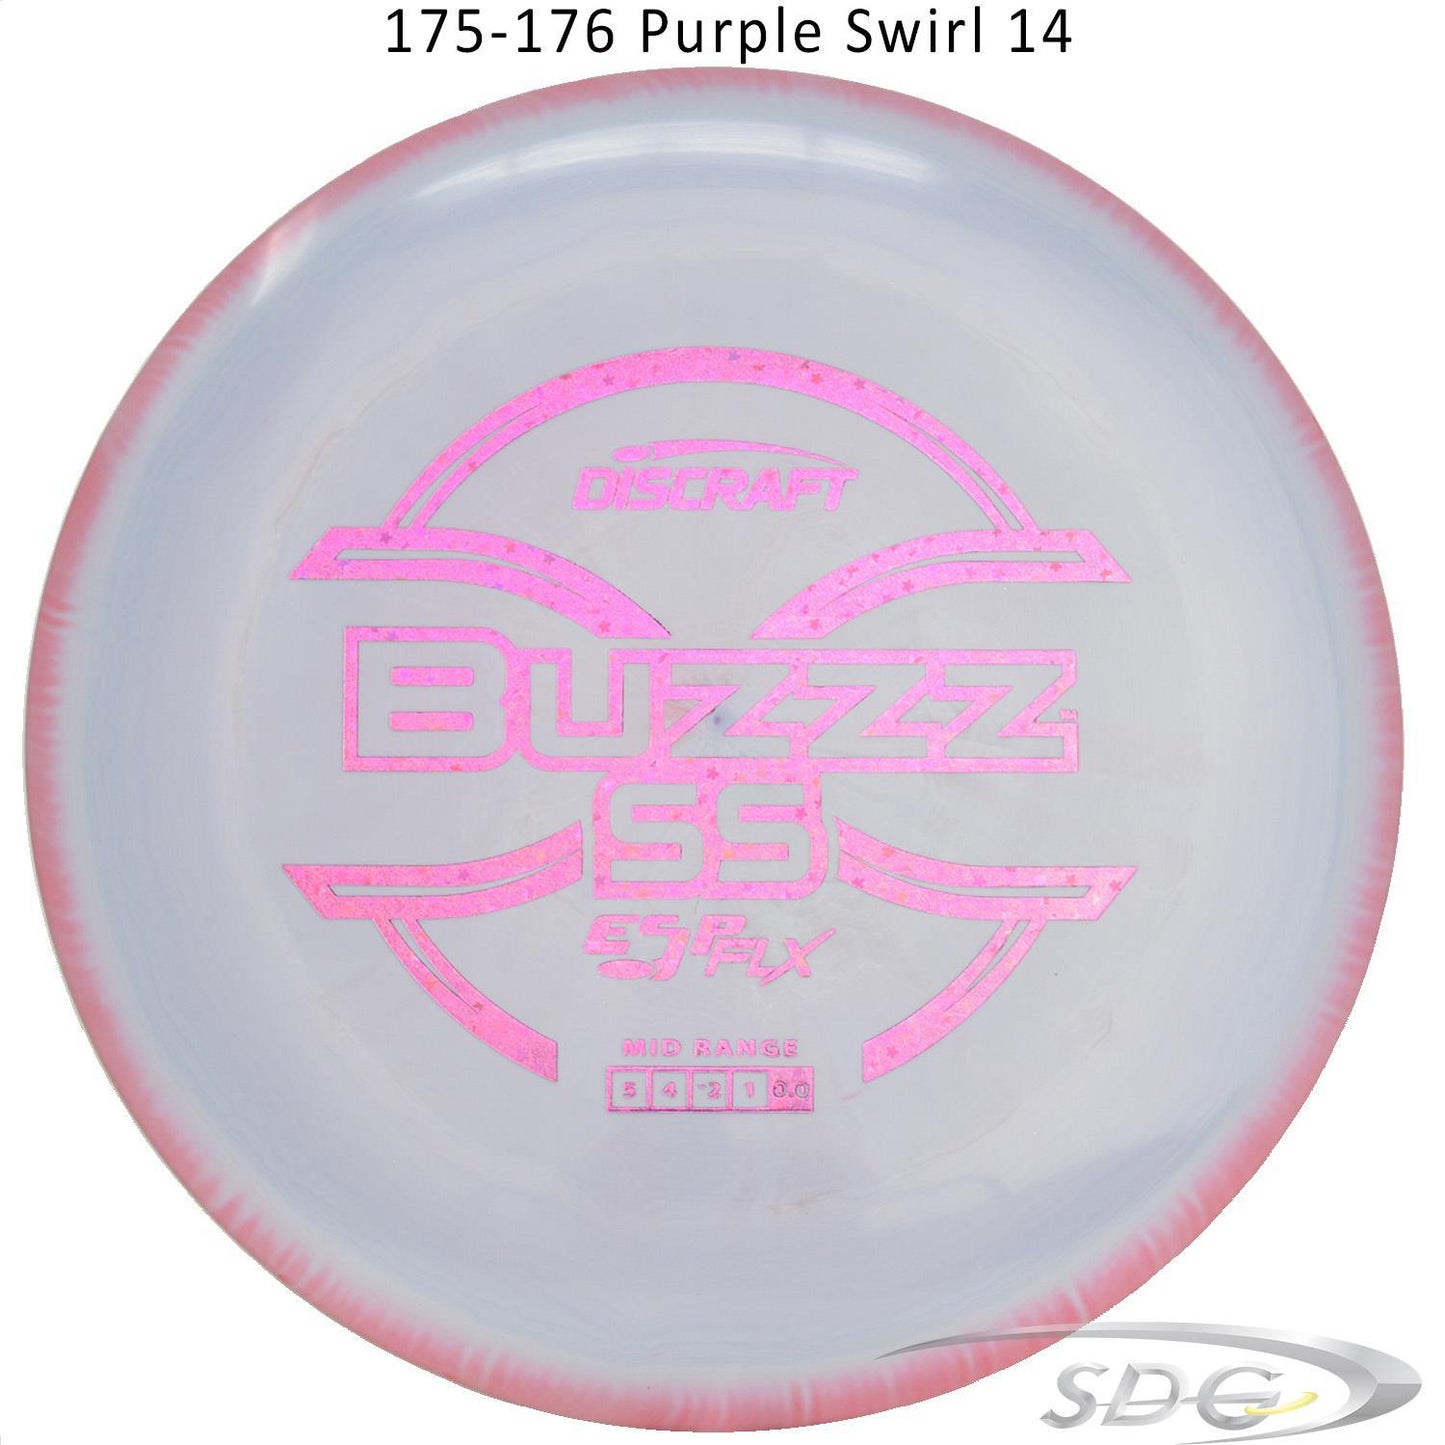 discraft-esp-flx-buzzz-ss-disc-golf-mid-range 175-176 Purple Swirl 14 